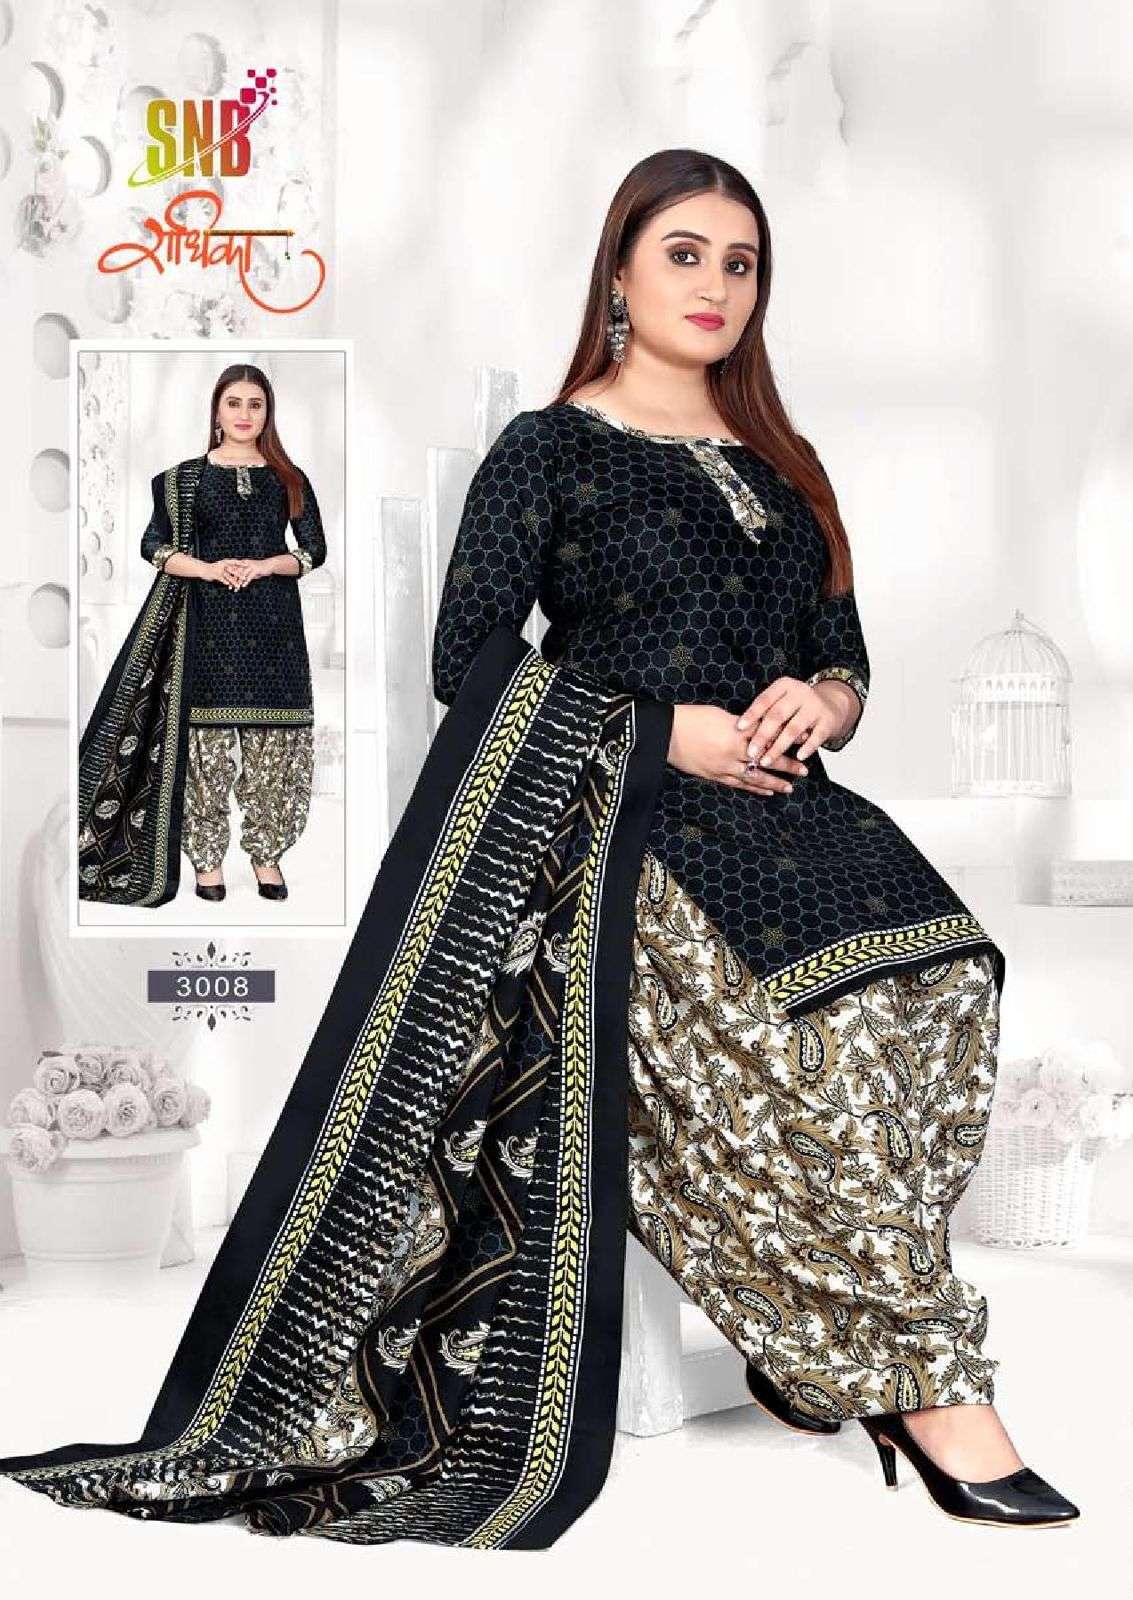 Snb Radhika Vol 3 Soft Cootn Patiyala Dress Materials Wholesale fabric suppliers